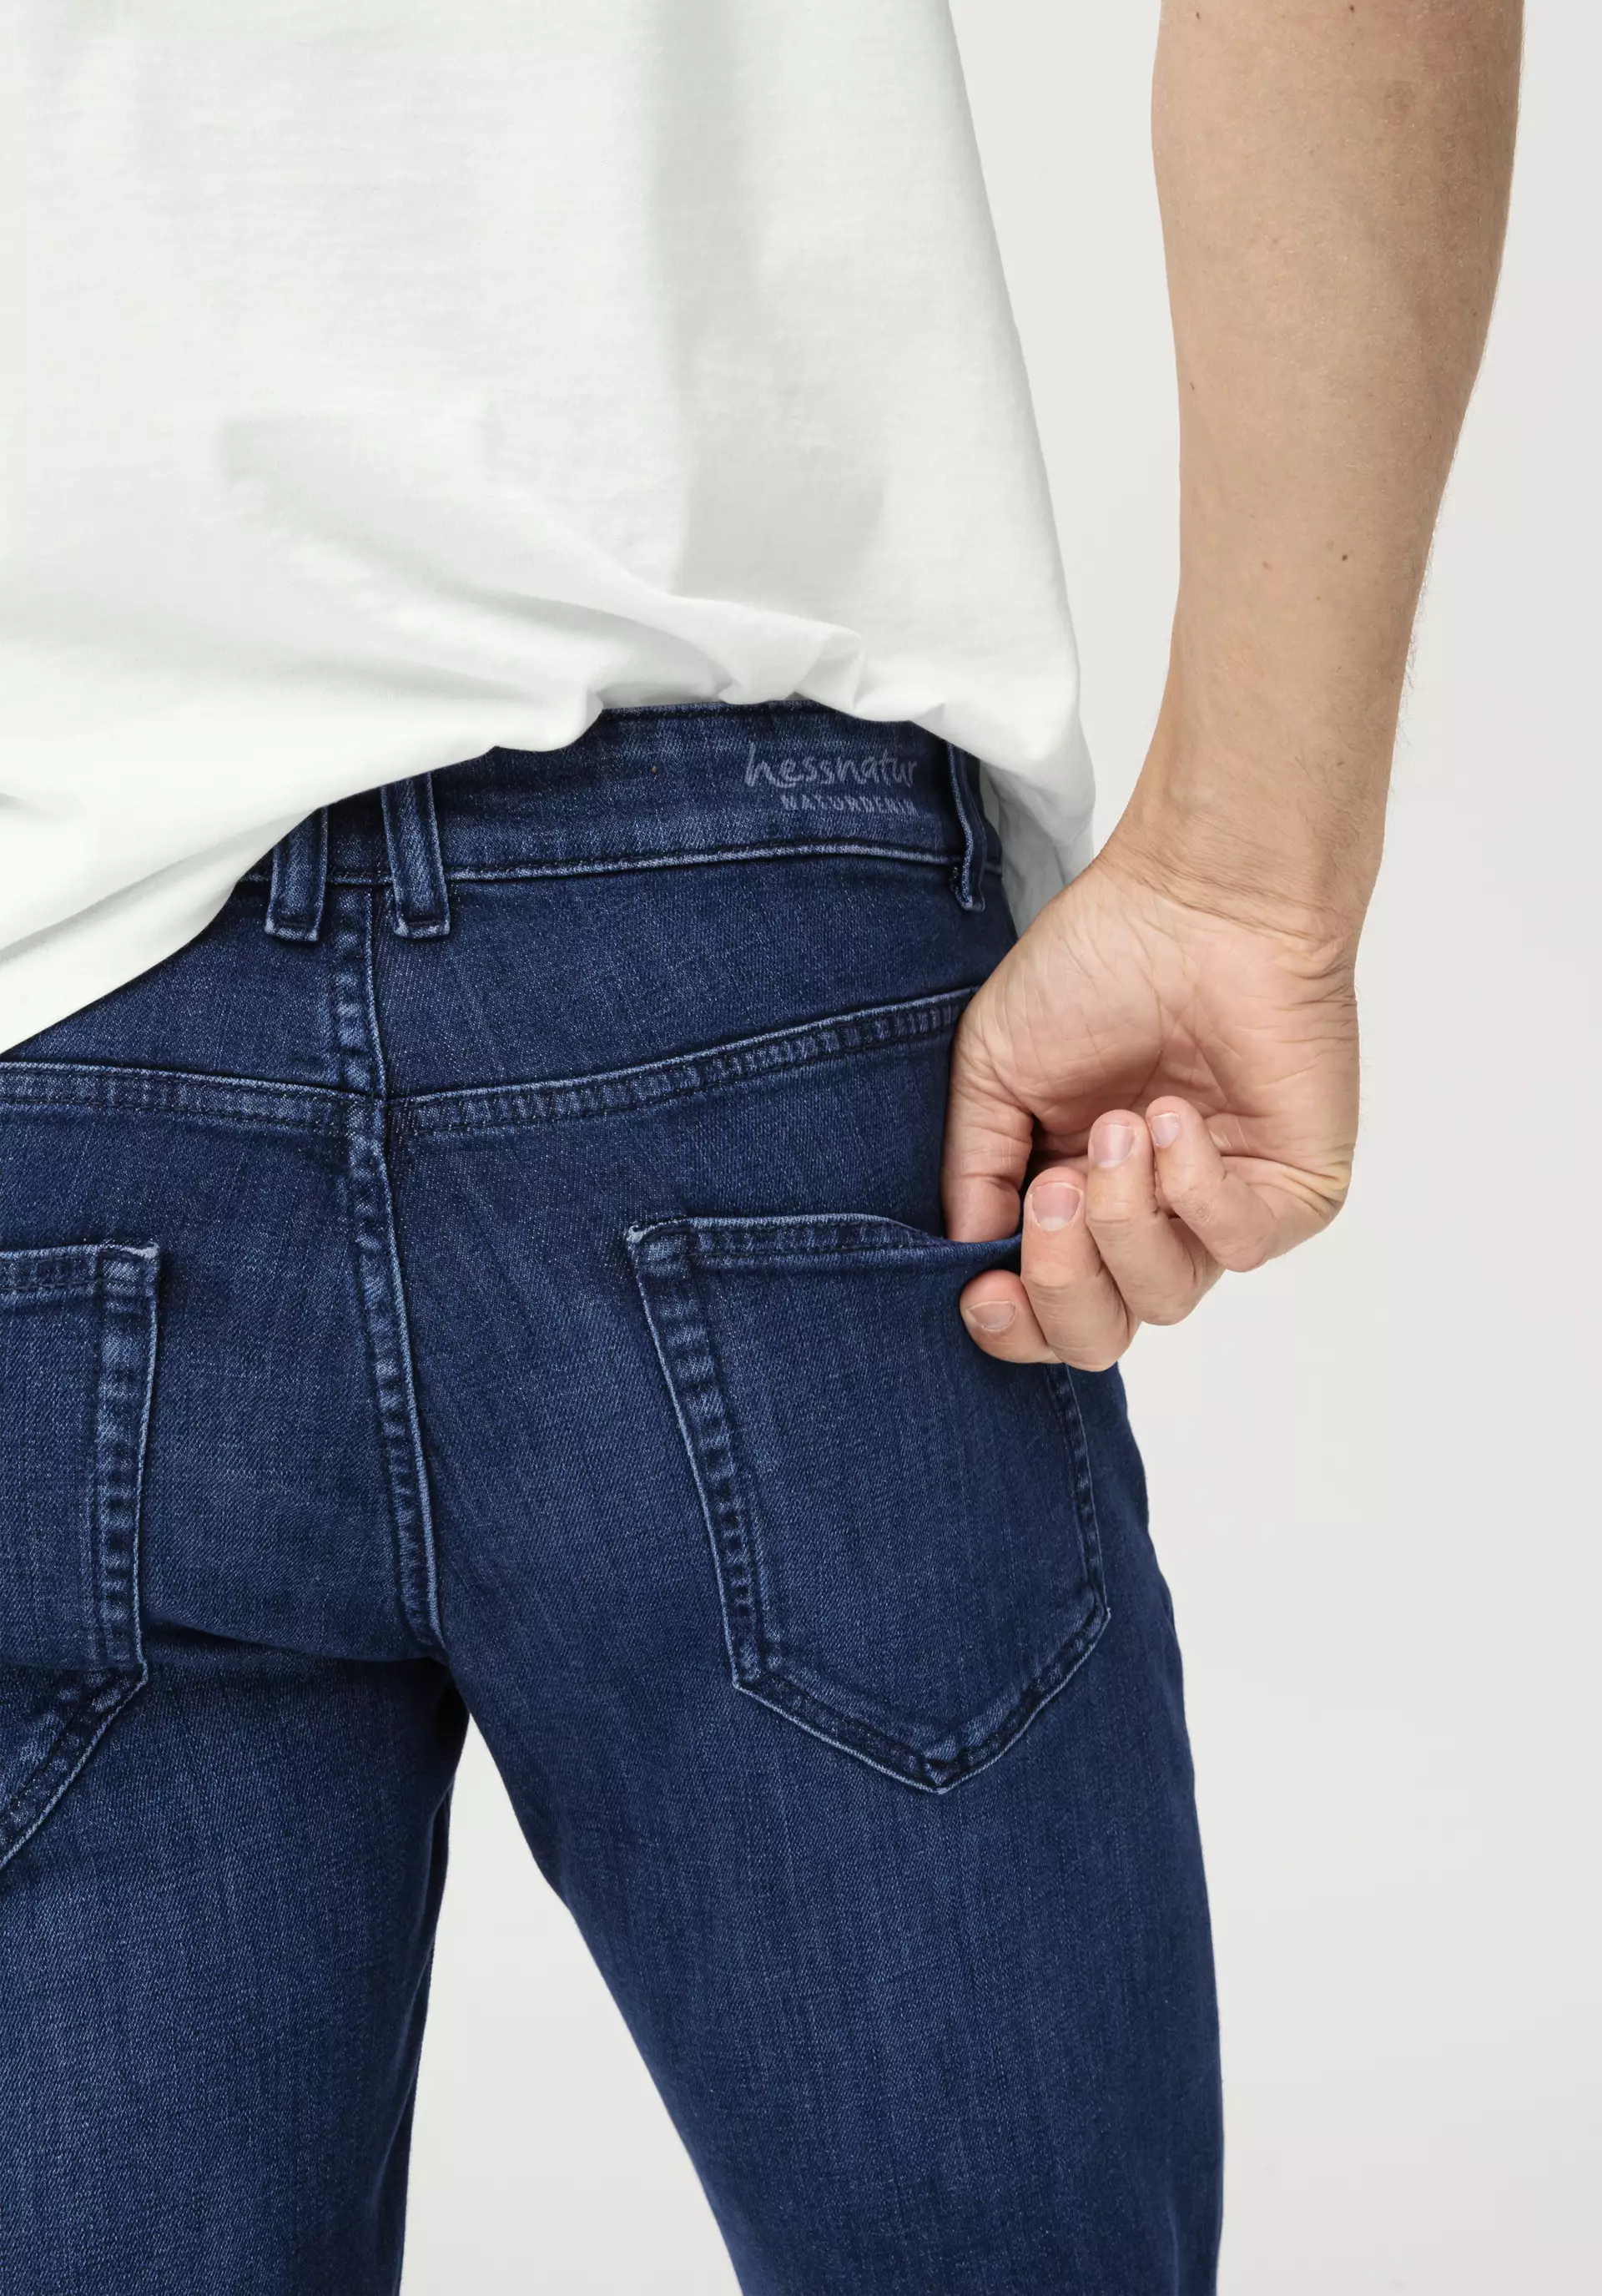 JASPER Slim jeans made from organic denim - 3